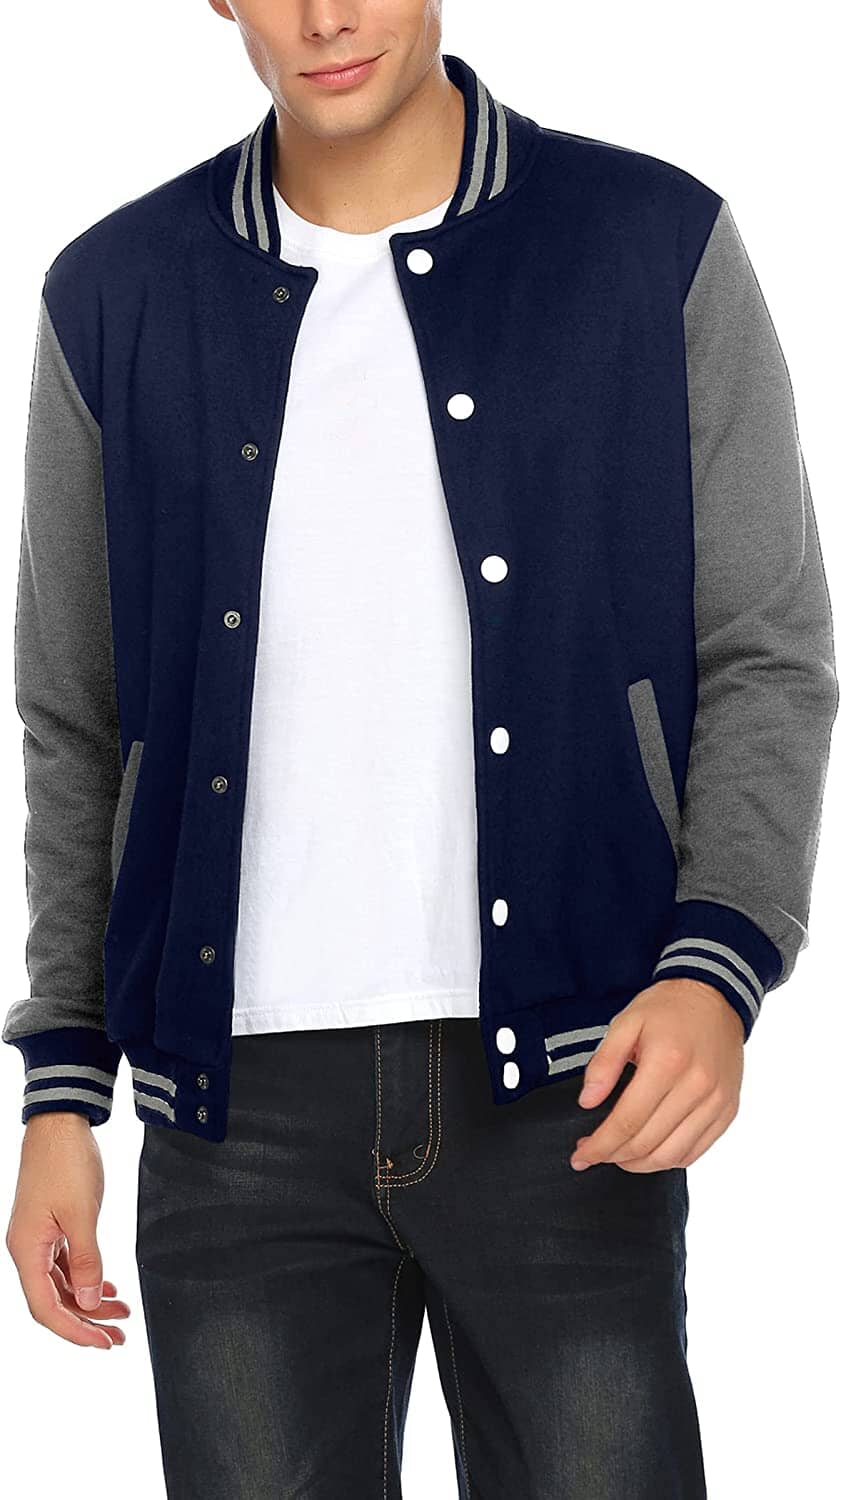 Fashion Varsity Cotton Bomber Jackets (US Only) Jackets COOFANDY Store Navy/Grey S 